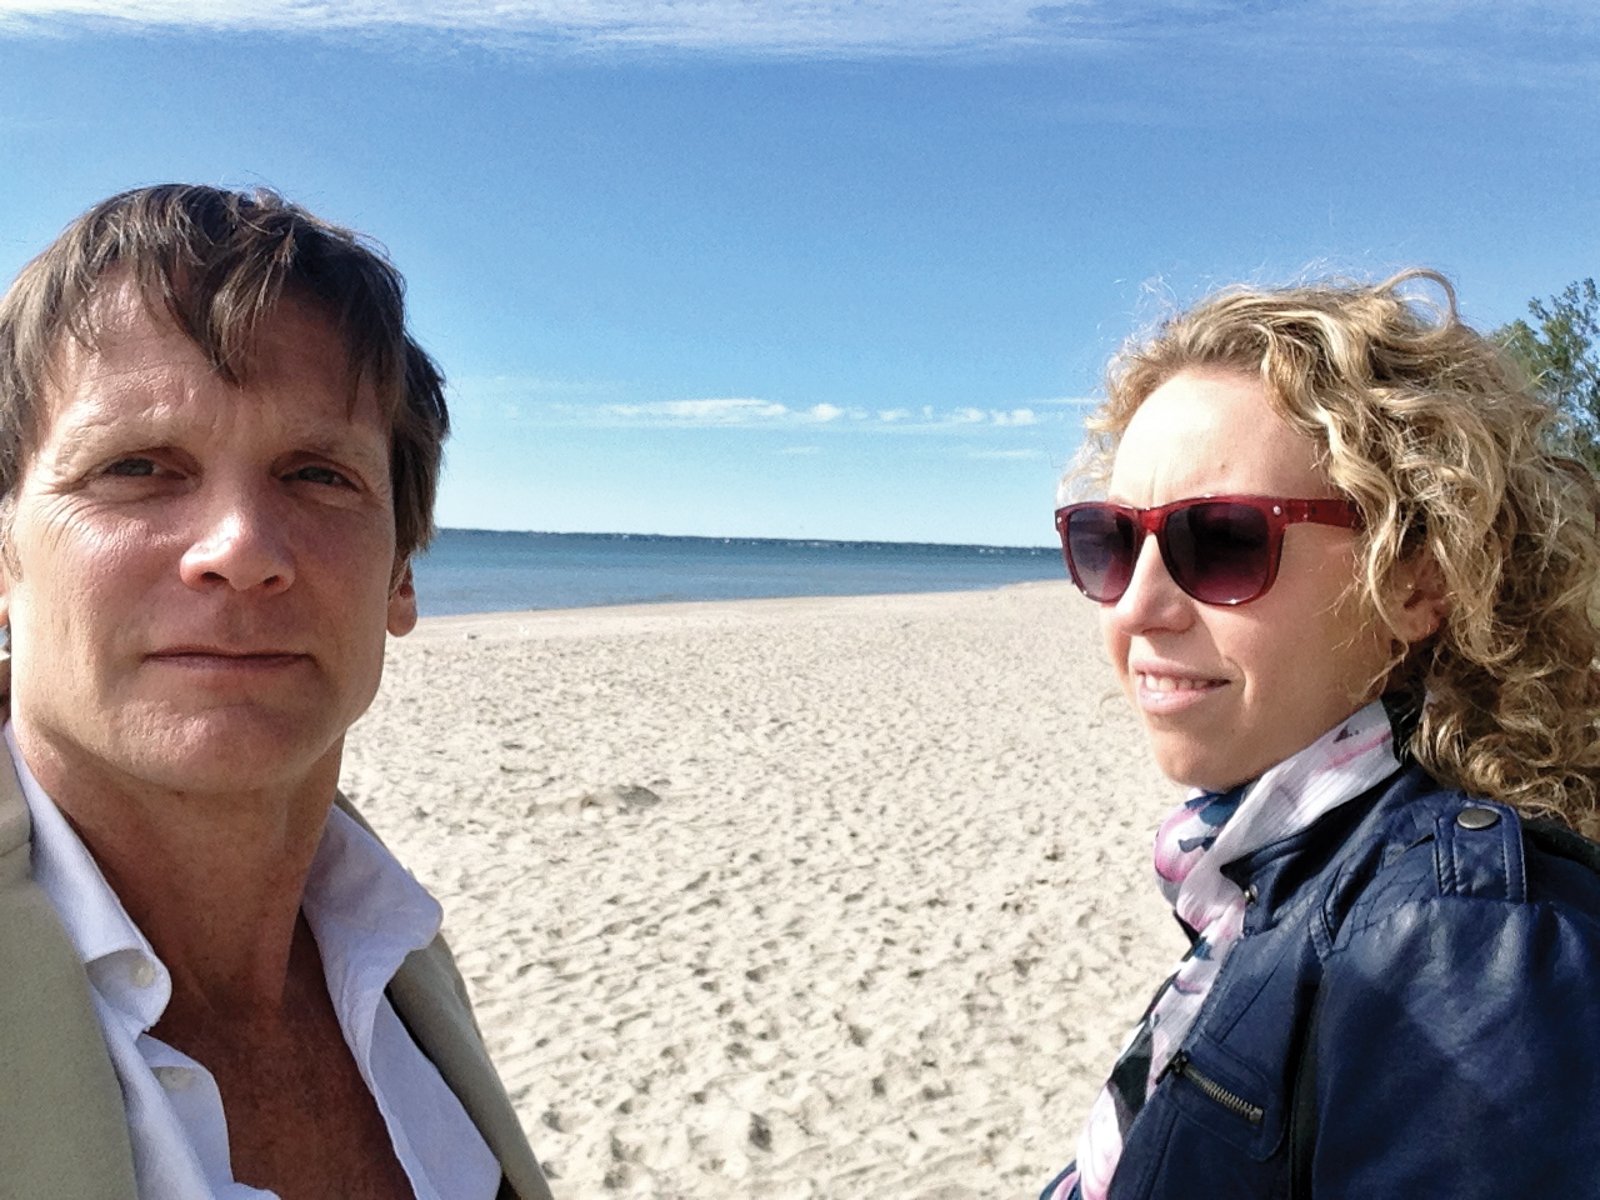 John and Carmel on The Sandbanks Beach, Prince Edward County, Ontario